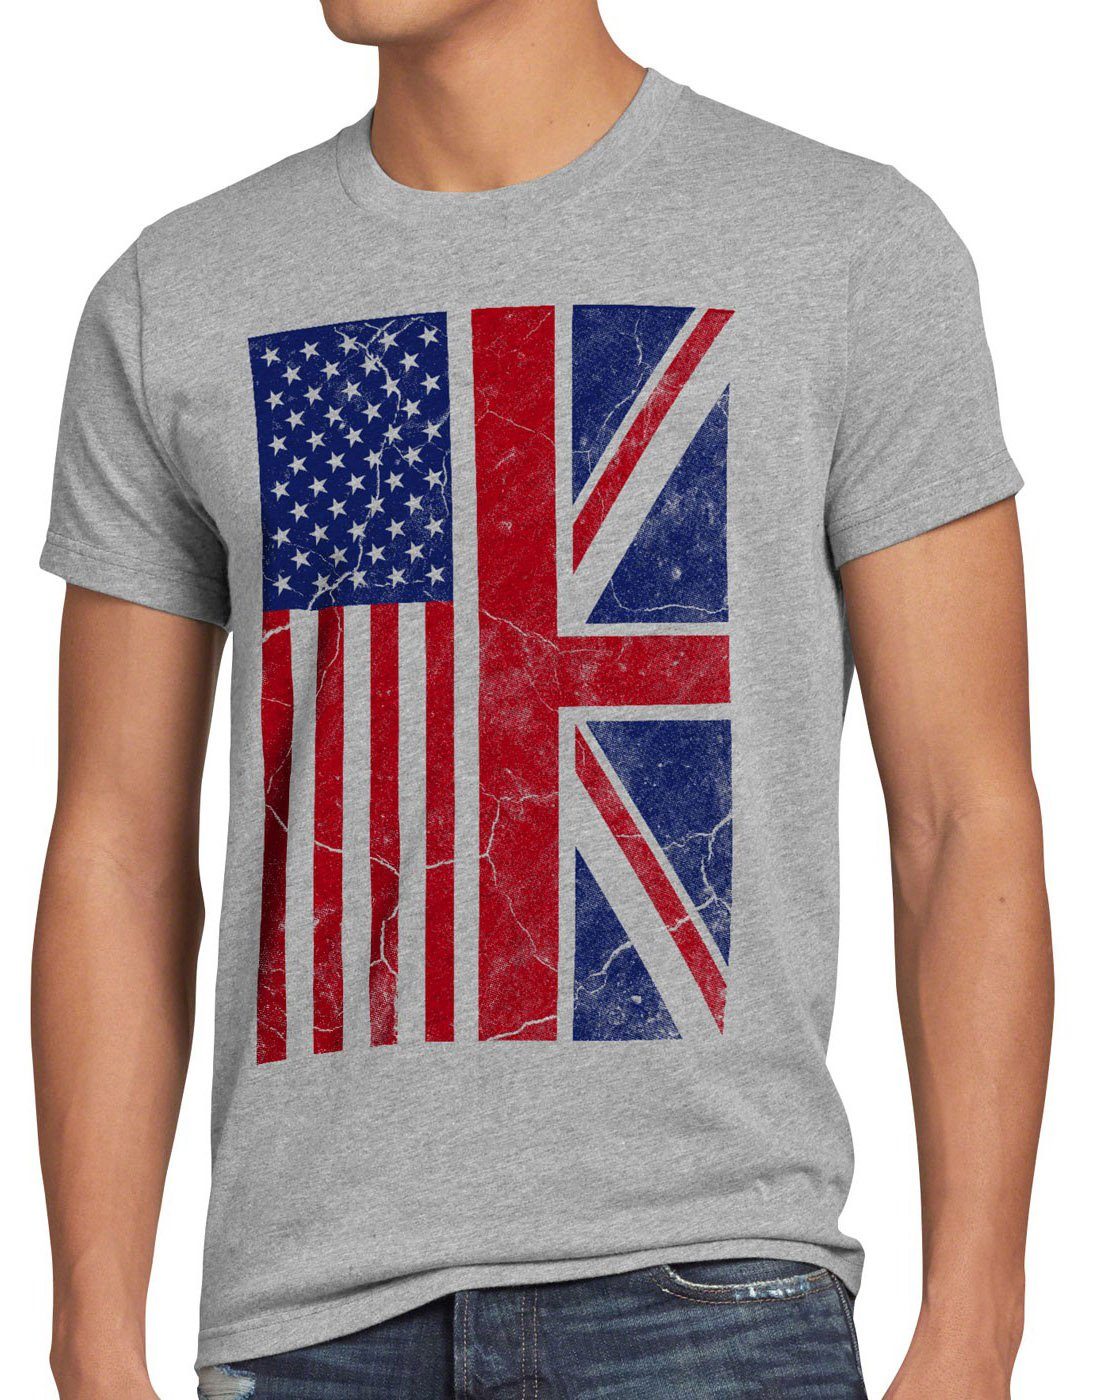 brexit meliert T-Shirt Jack grau USA Amerika Print-Shirt Stars Union England Stripes Herren Flagge Flag style3